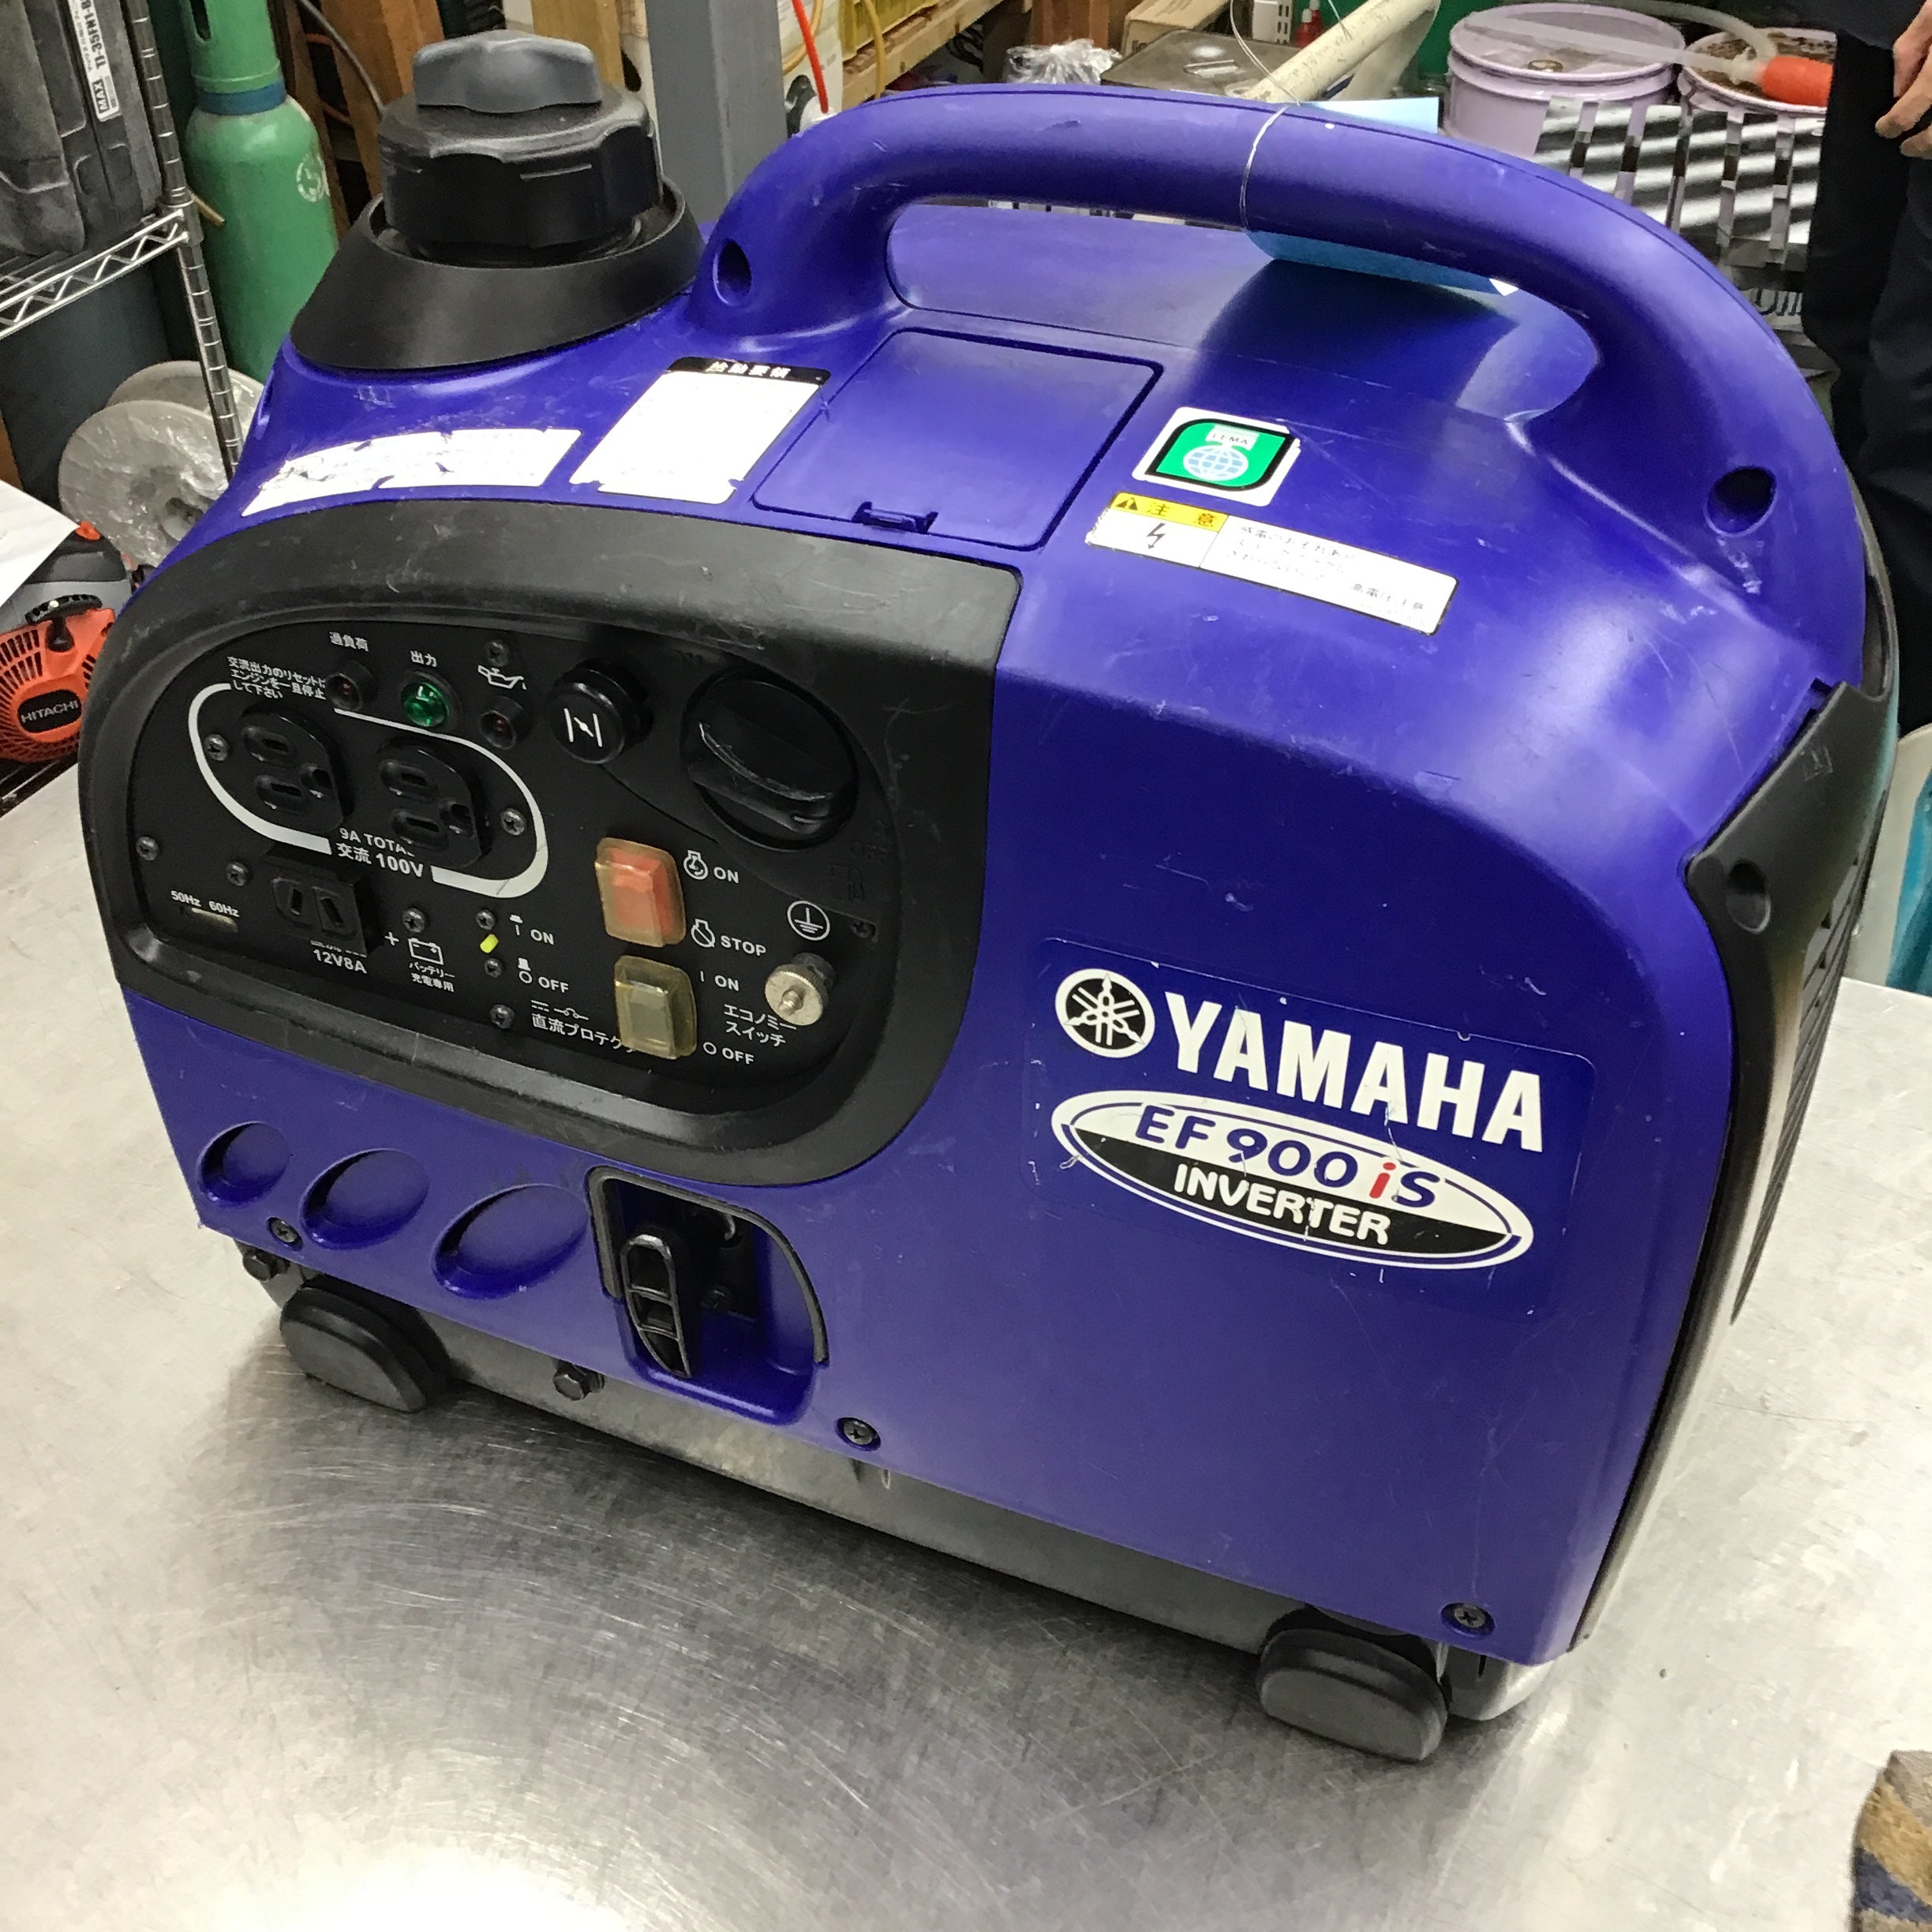 YAMAHA ヤマハ インバーター発電機 EF900is防災関連グッズ